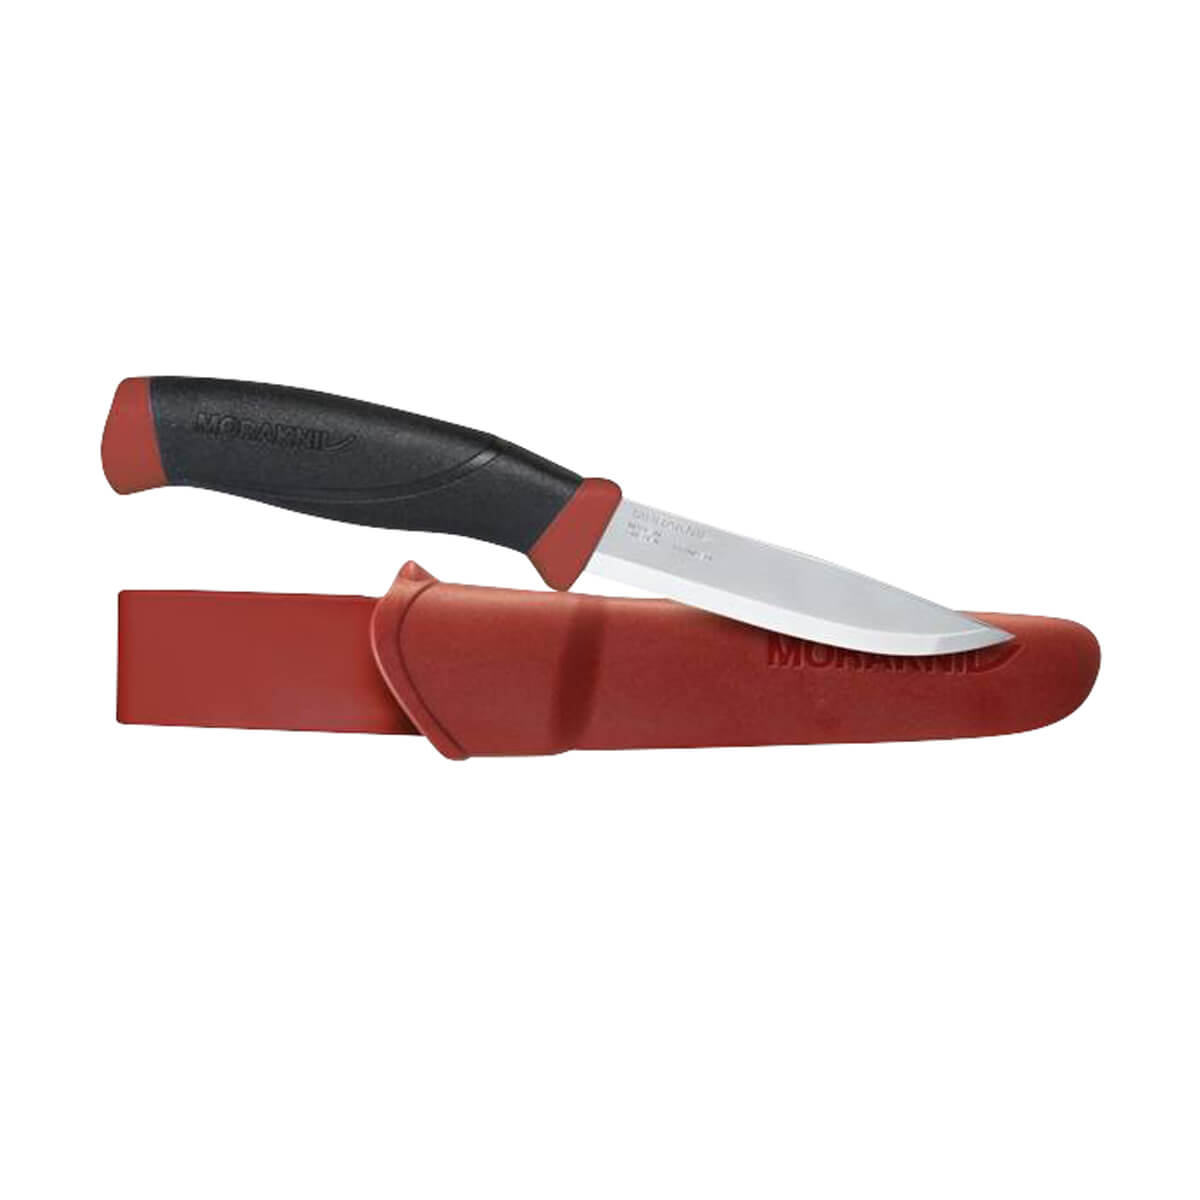 Mora Companion Knife - Red